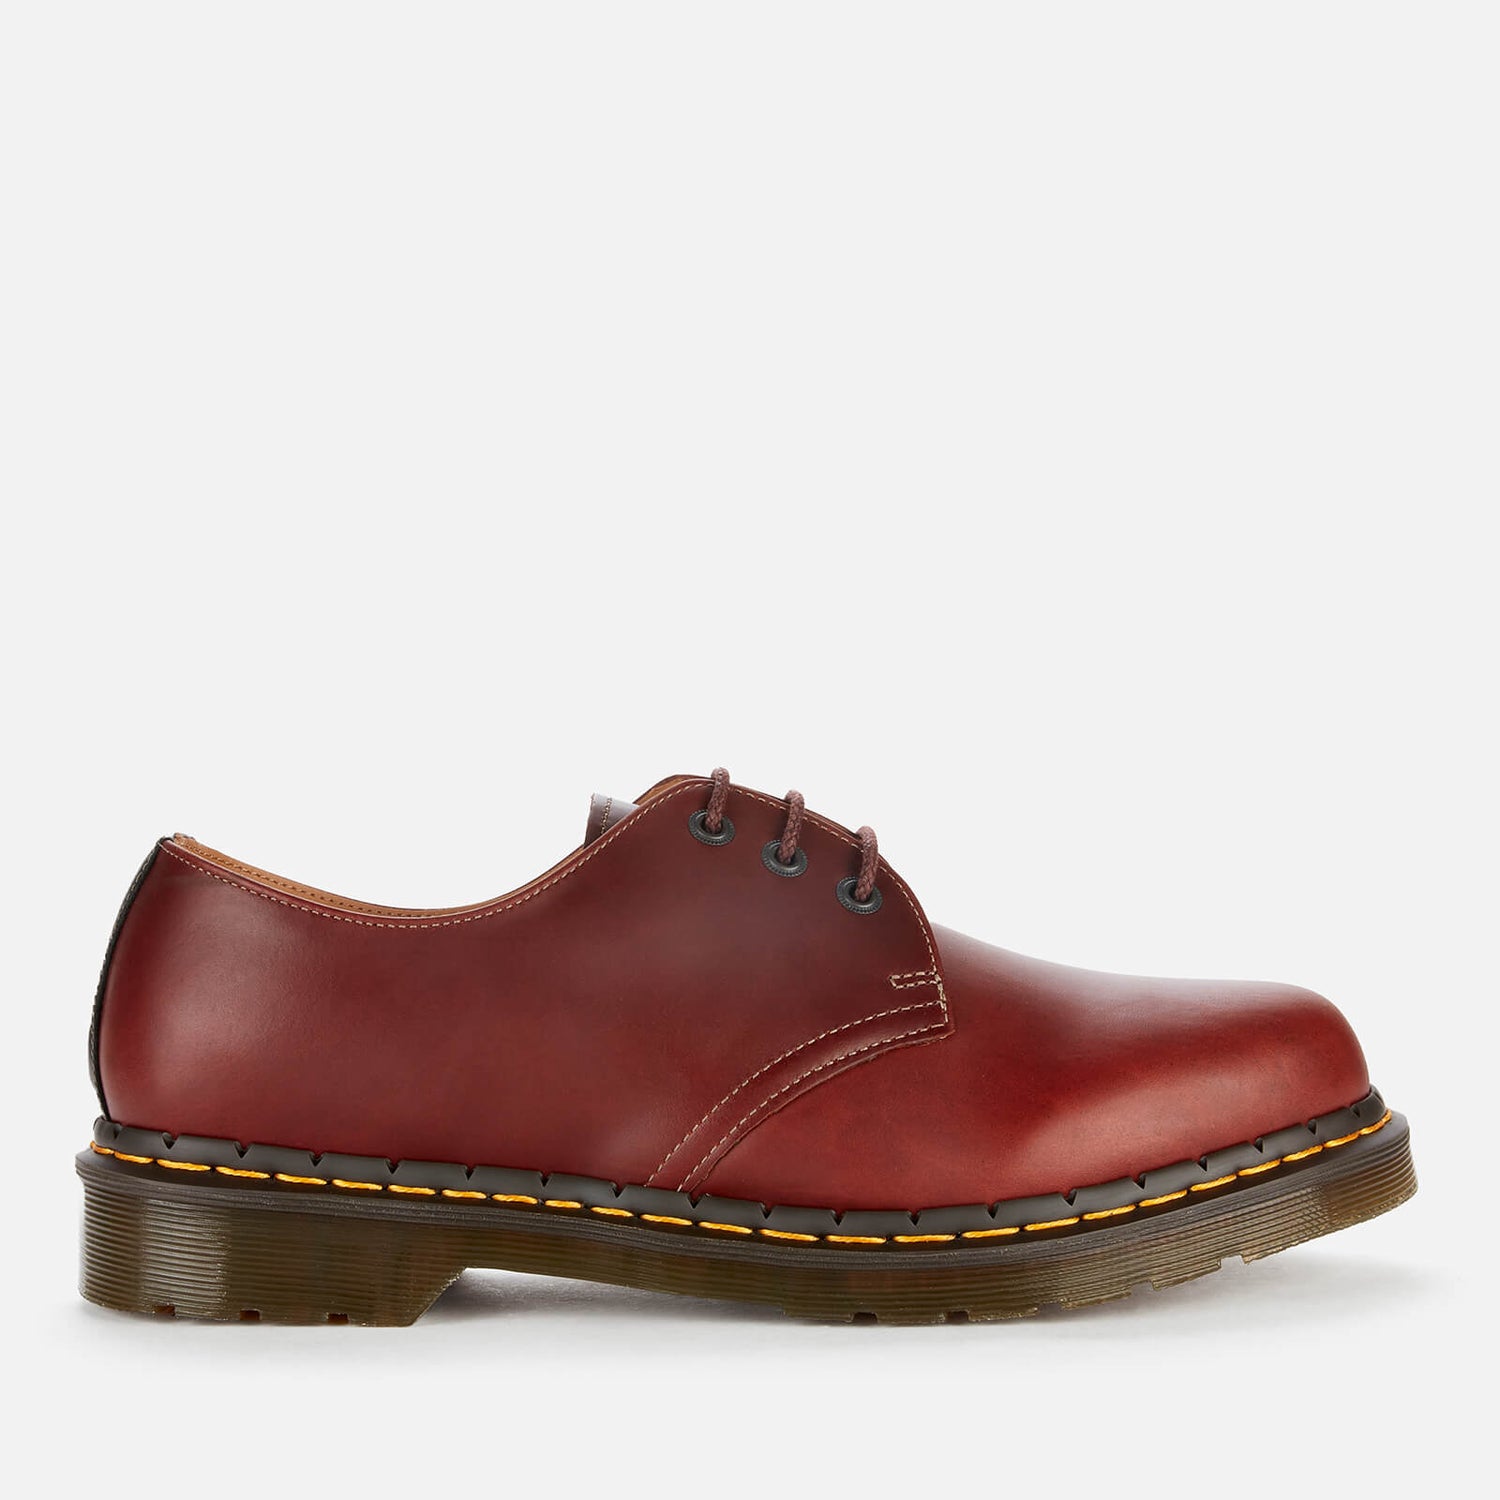 Dr. Martens Men's 1461 Waterproof Leather 3-Eye Shoes - Brown